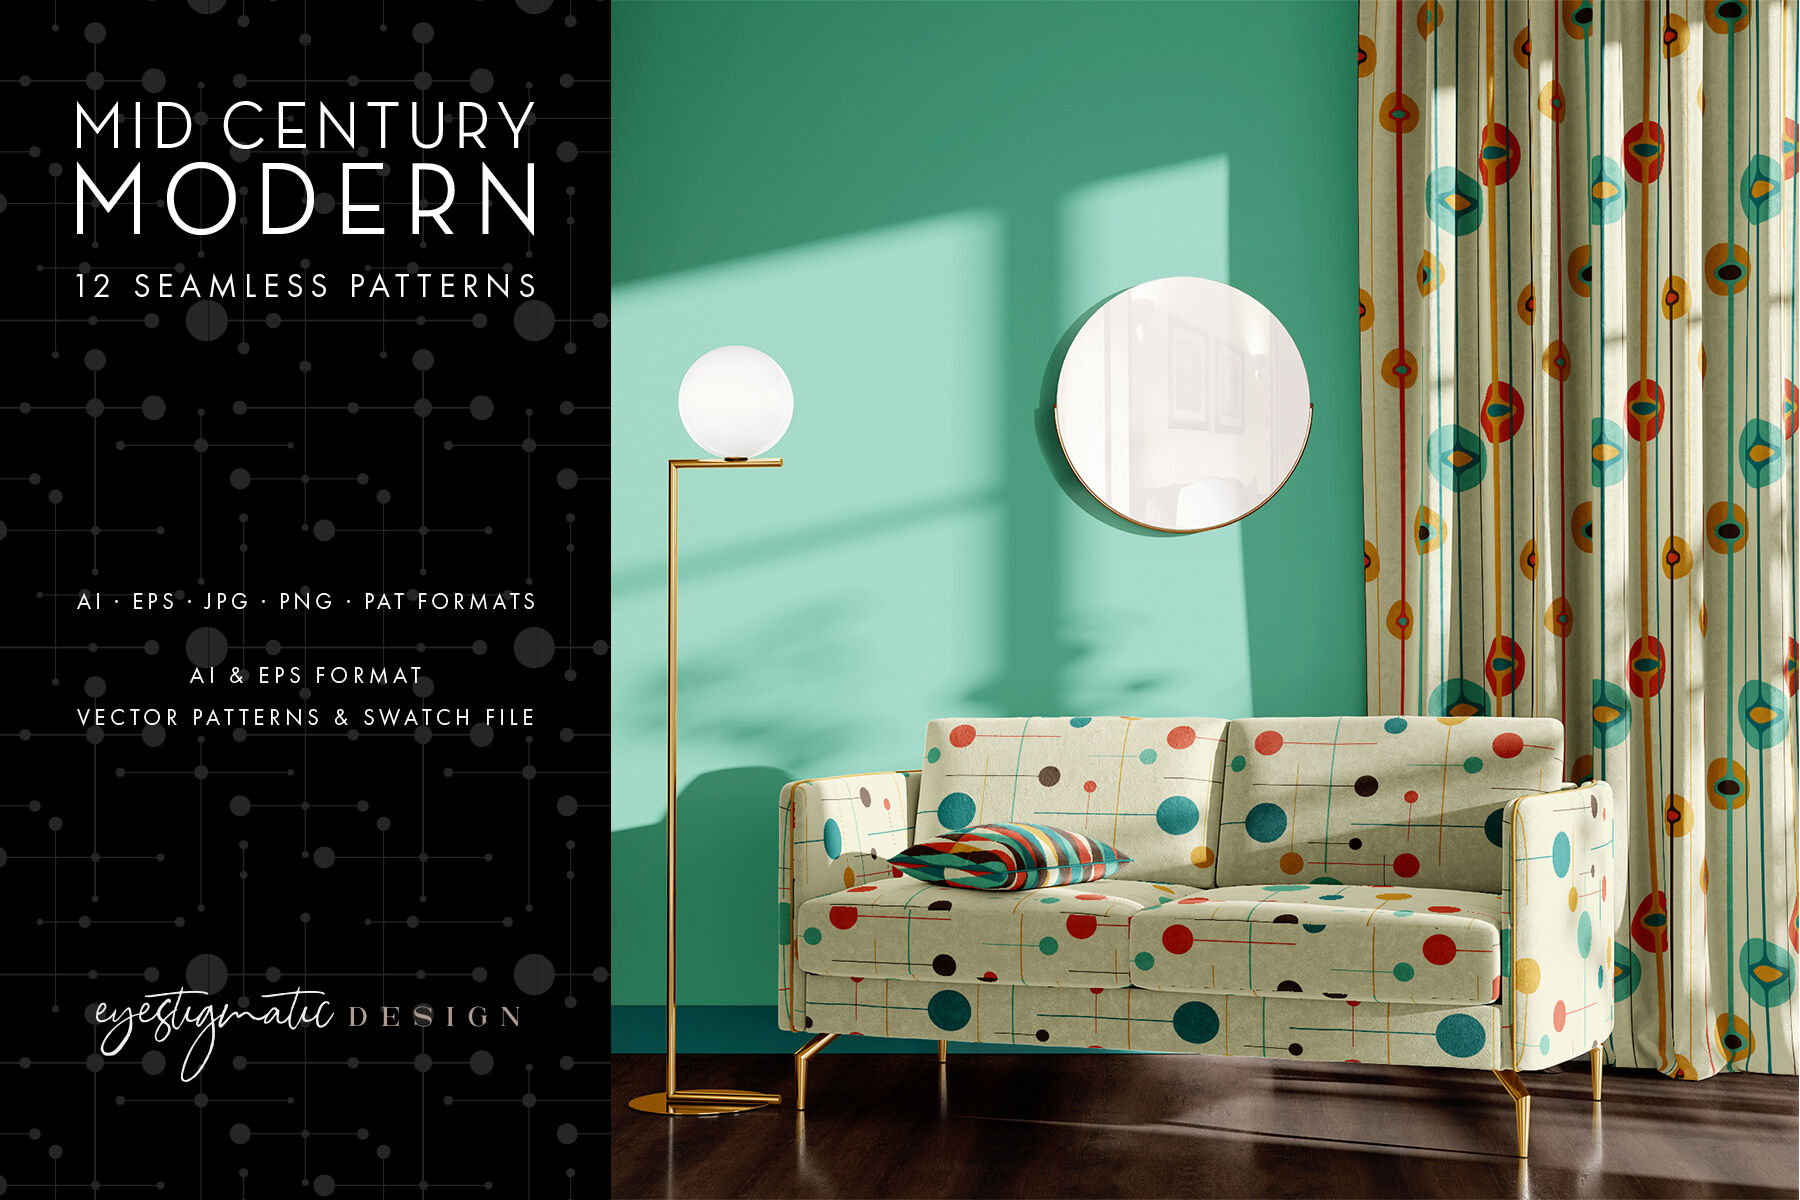 12 Seamless Mid Century Modern Patterns - Set 3 By Eyestigmatic